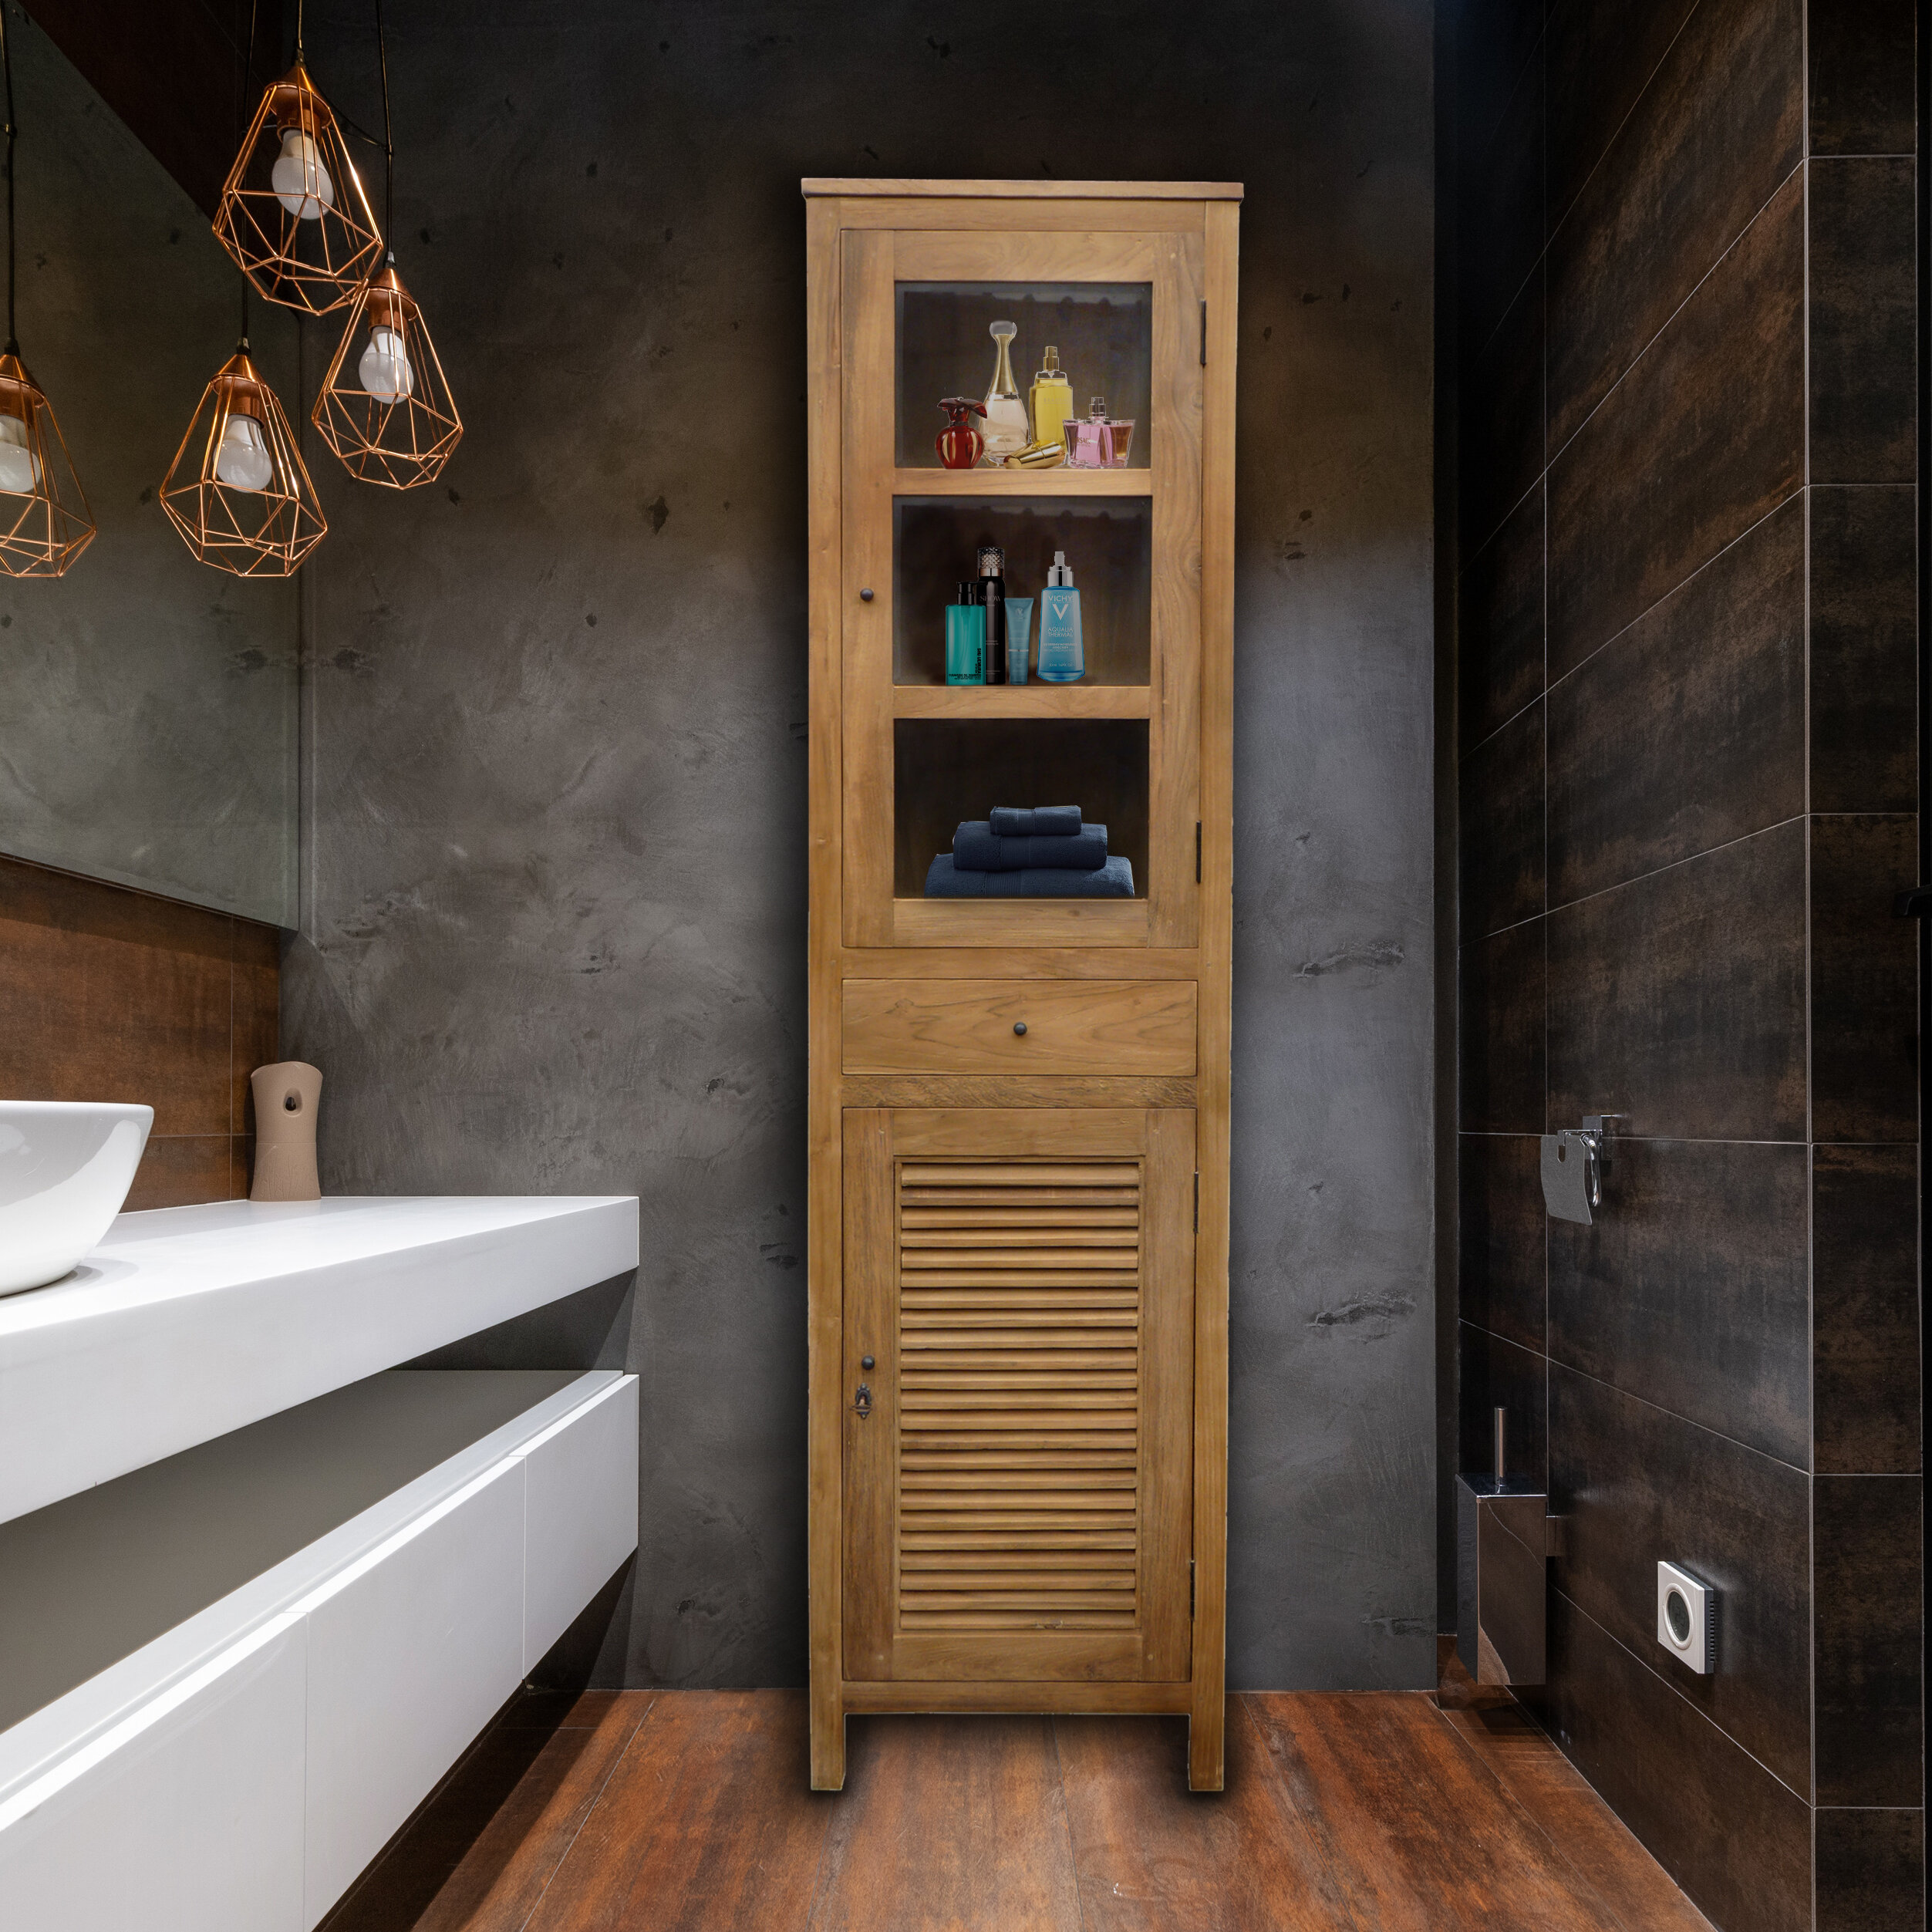 Recycled Teak Wood Lumbrera Vertical Bathroom Linen Cabinet with 1